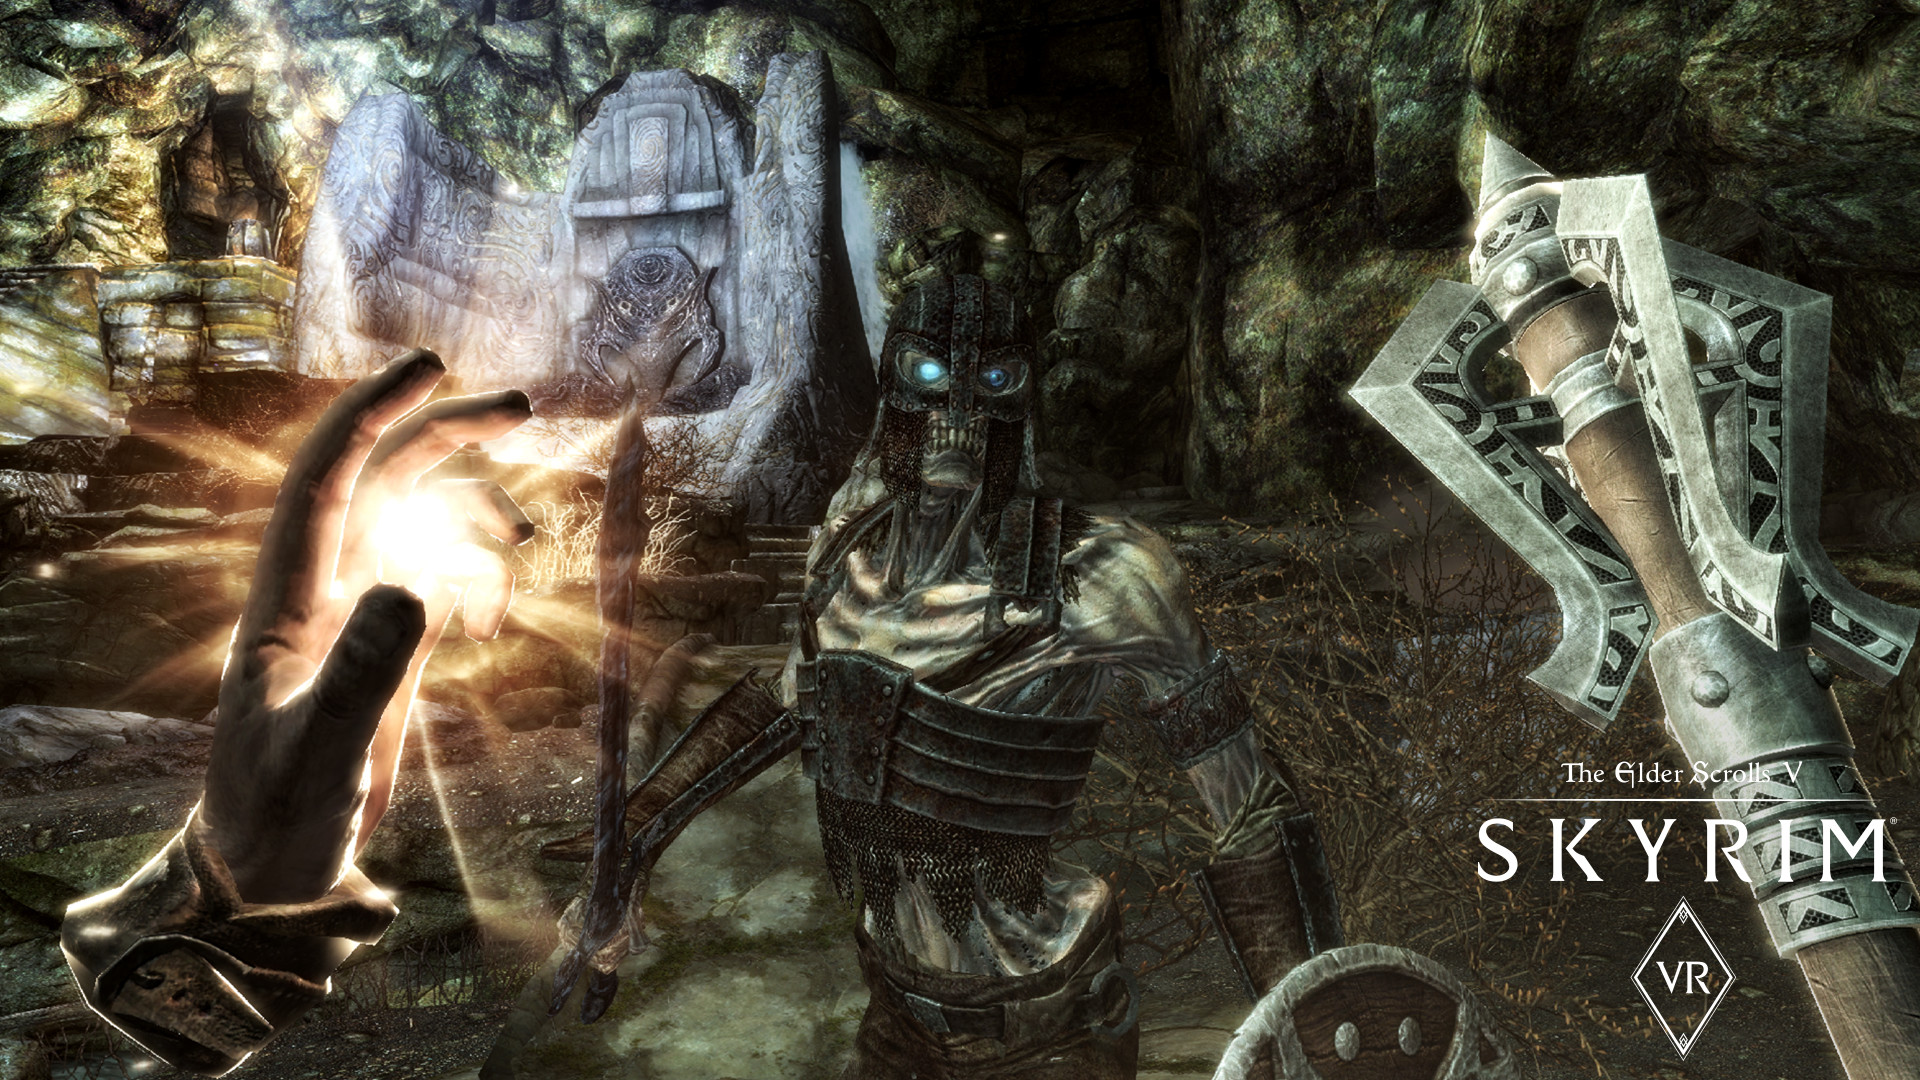 The Elder Scrolls V: Skyrim VR screenshot